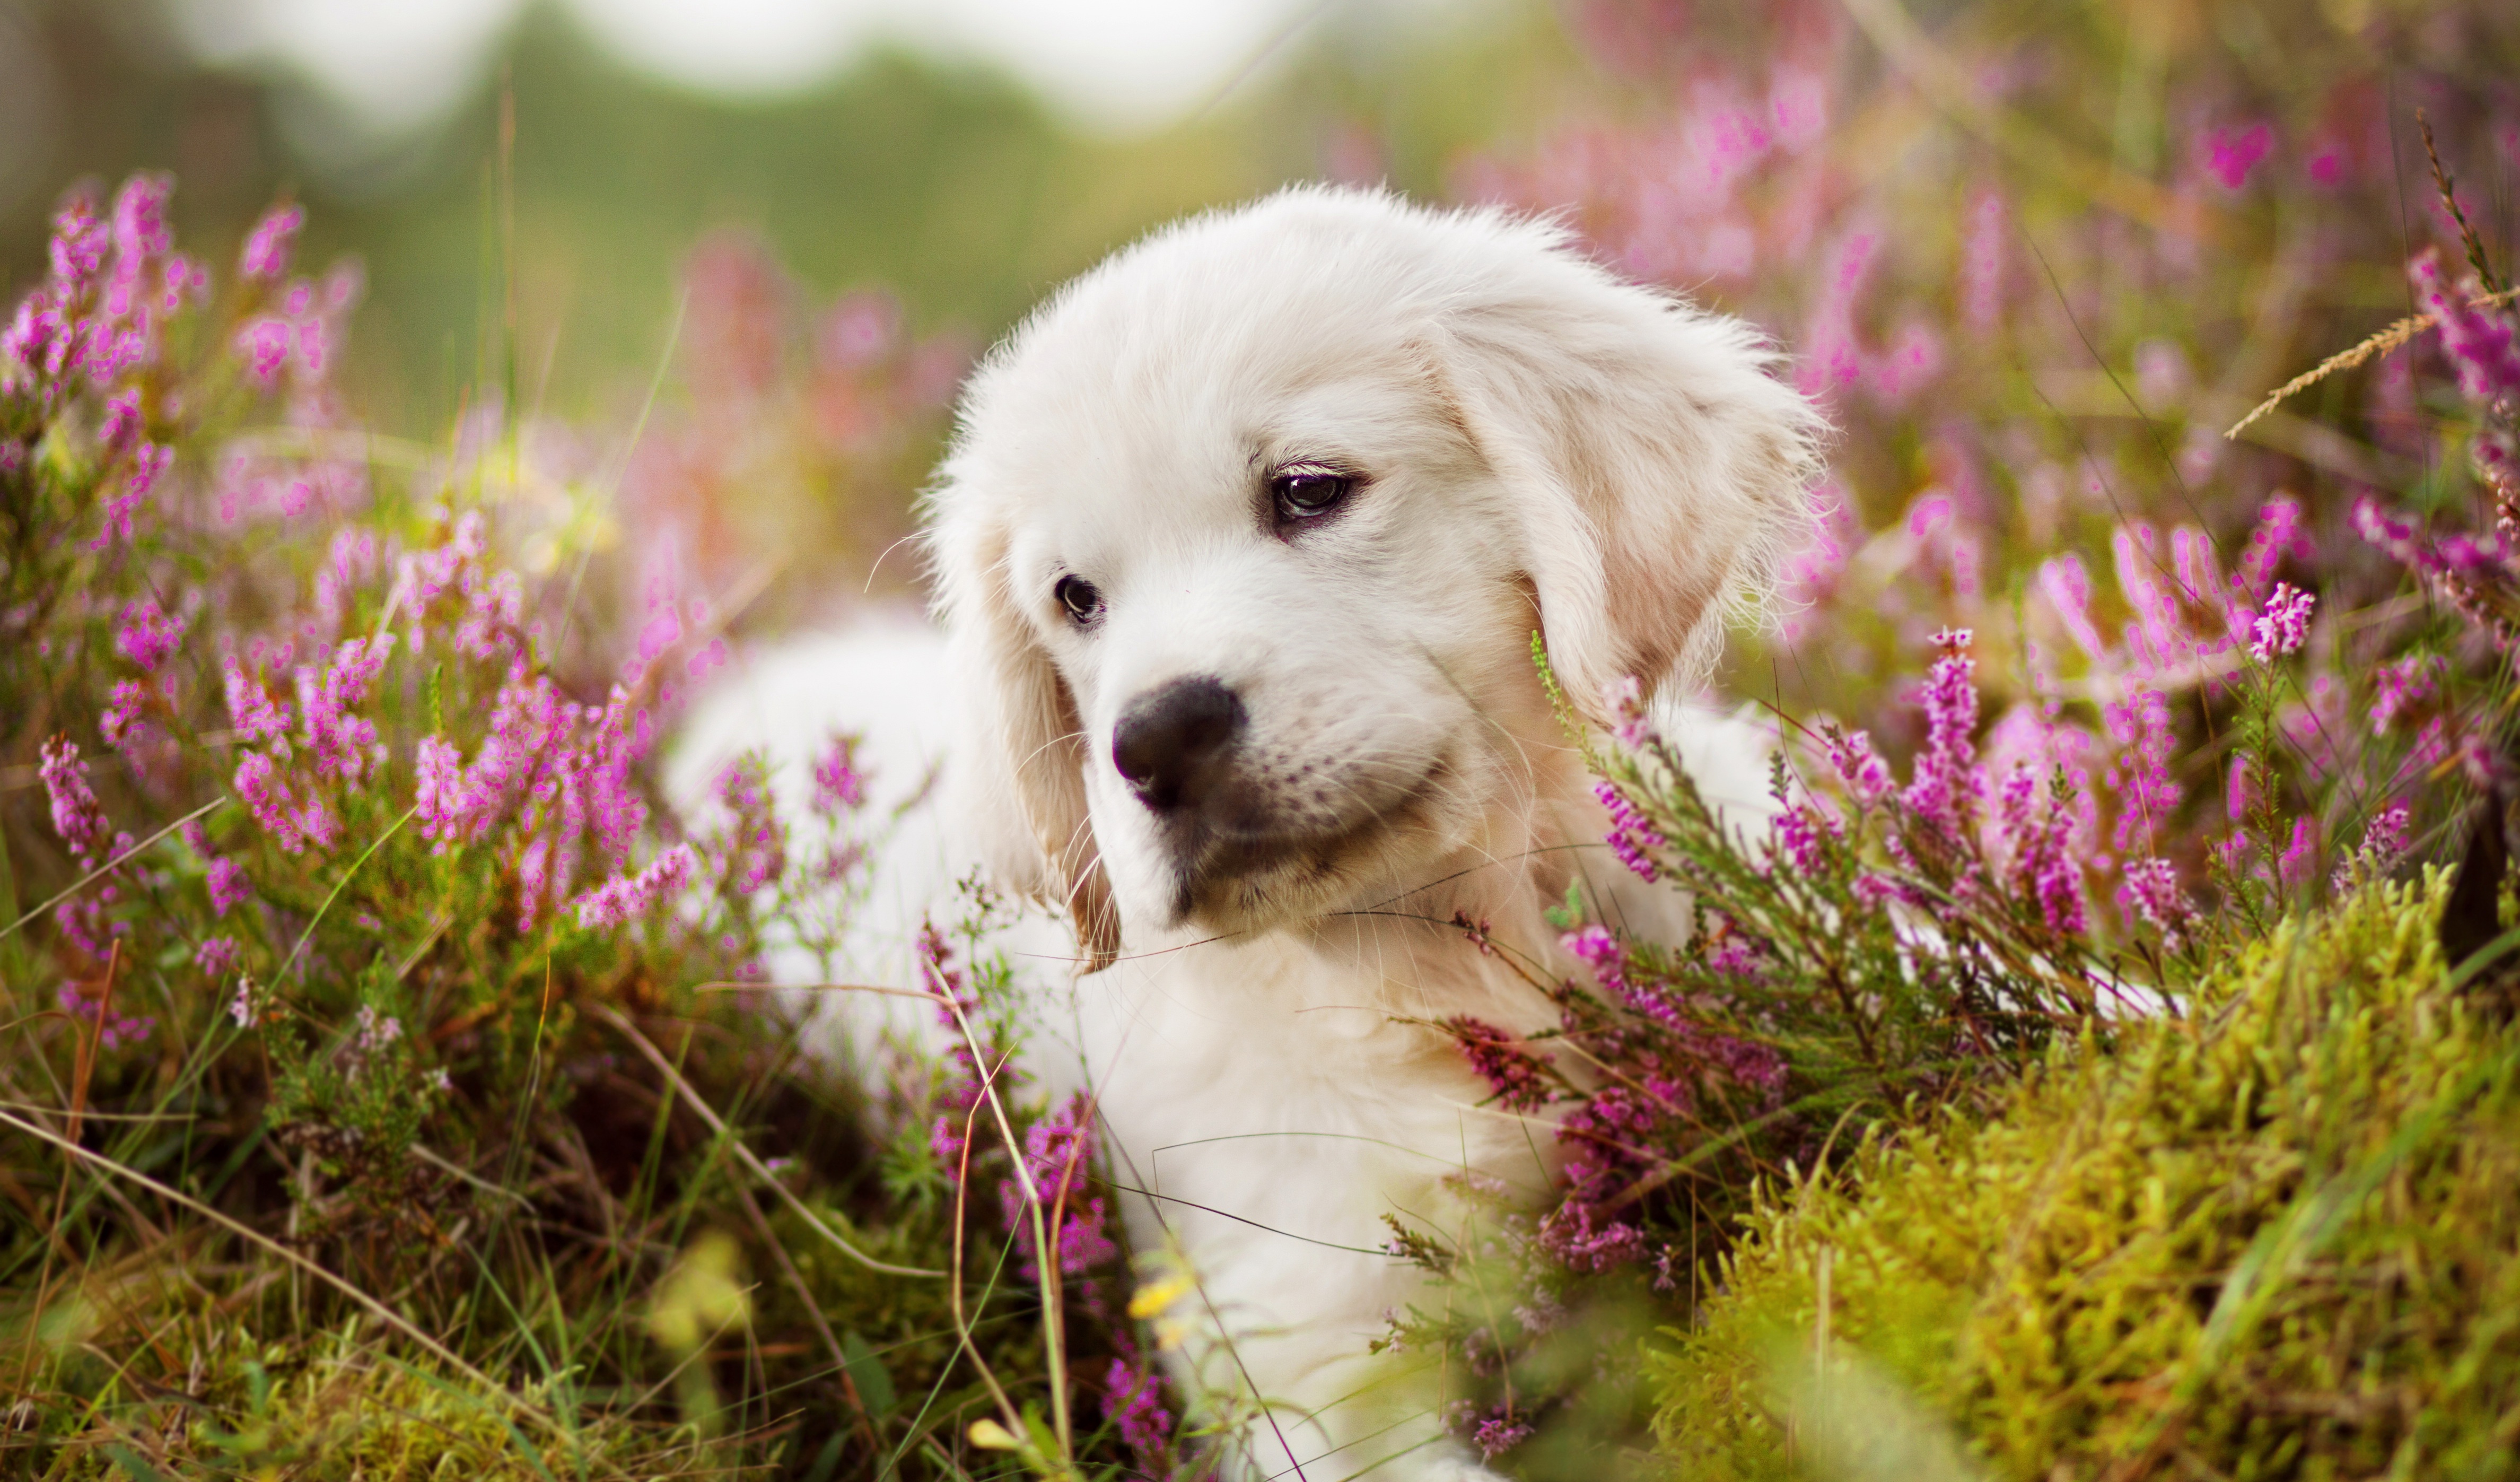 golden retriever, animal, baby animal, dog, moss, muzzle, pink flower, puppy, dogs